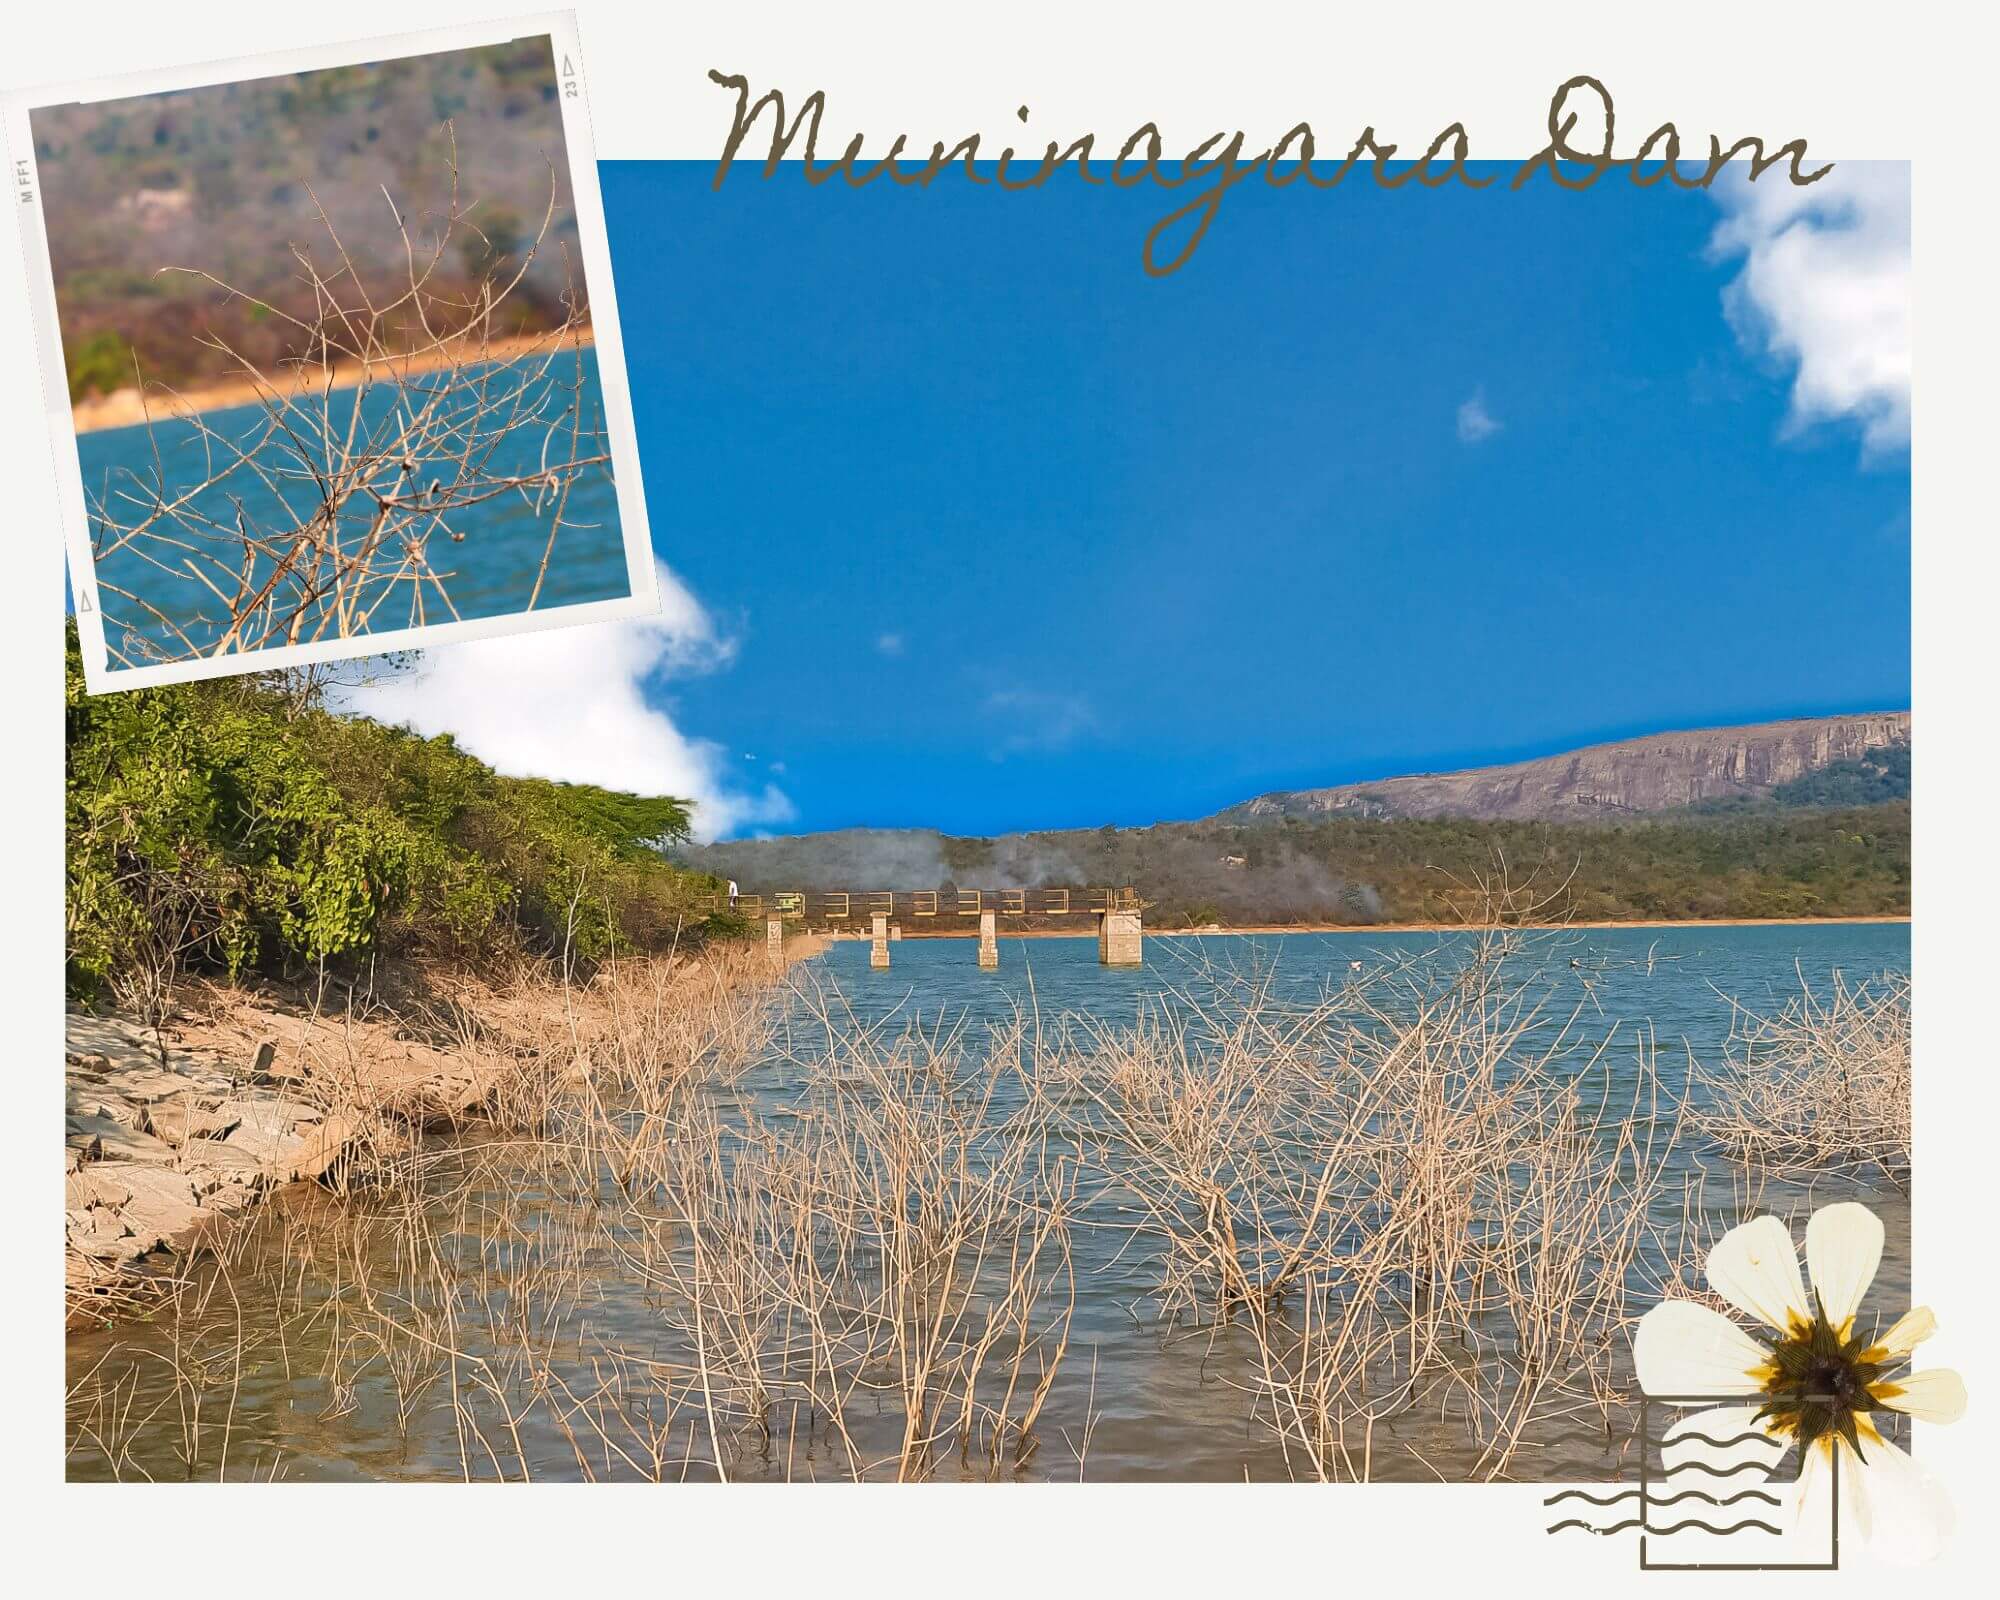 muninagara dam day trip from bangalore within 50 kms